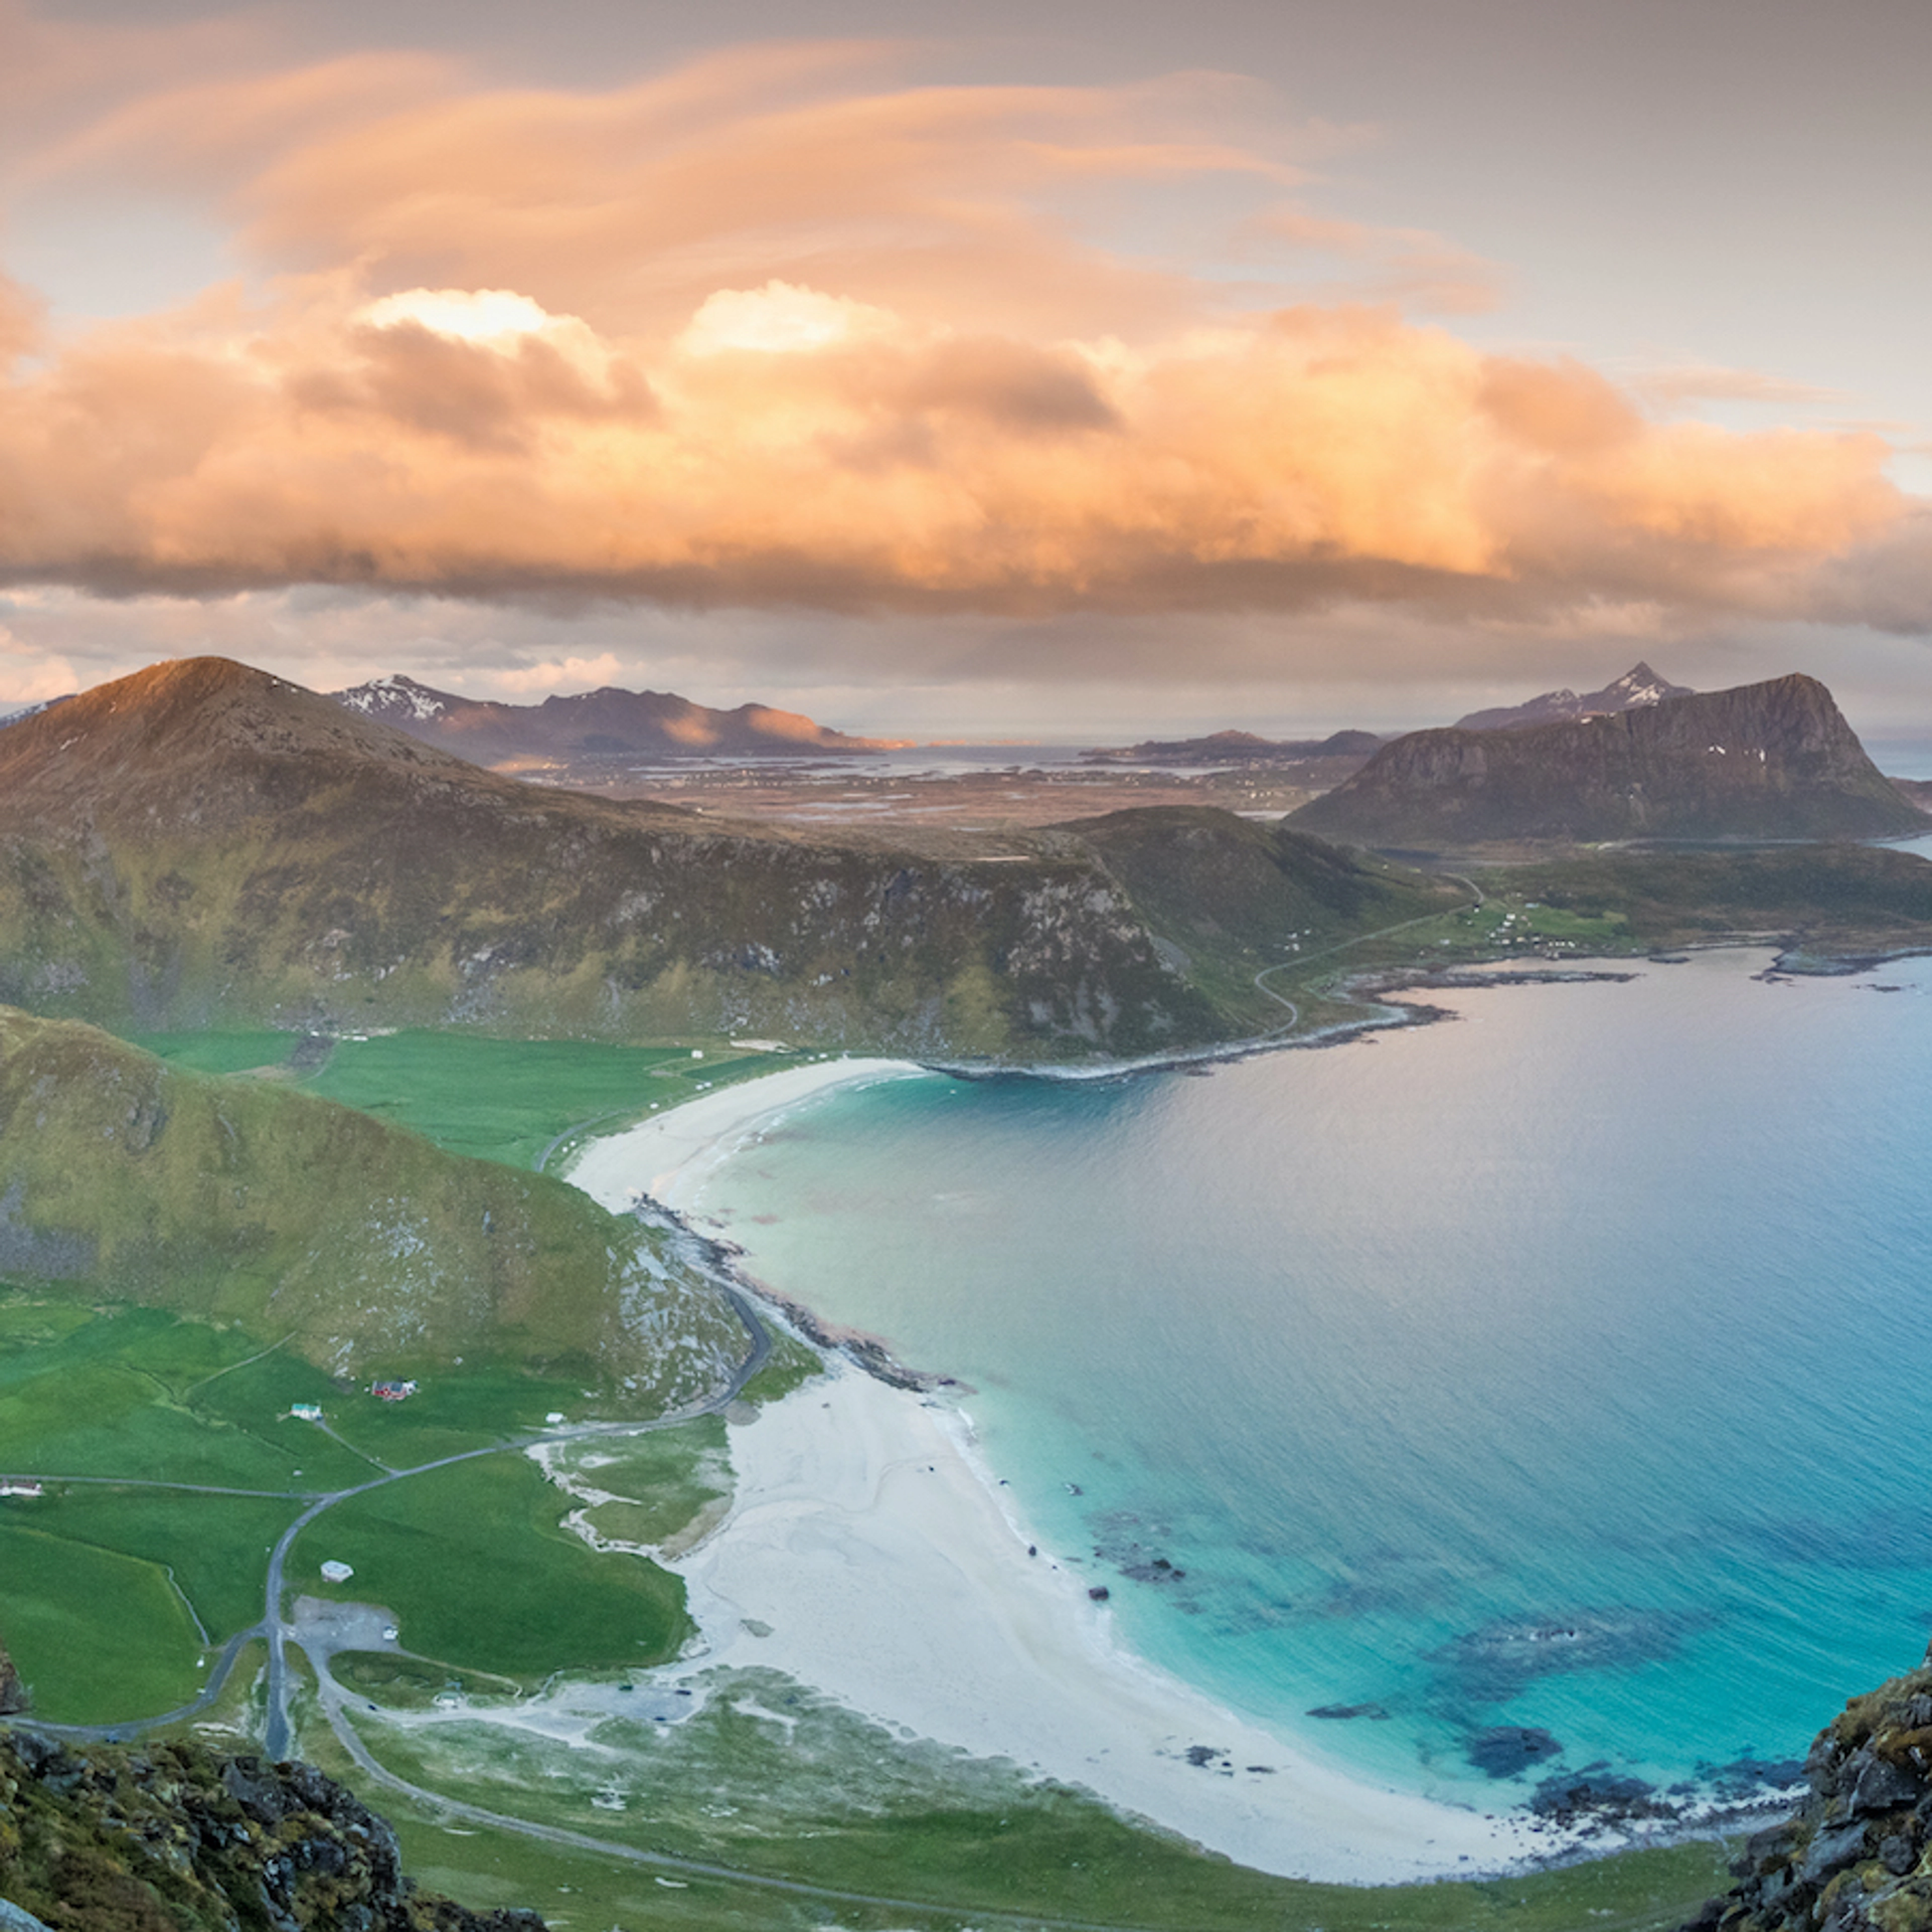 Oben auf dem Berg - Lofoten-Inseln, Norwegen